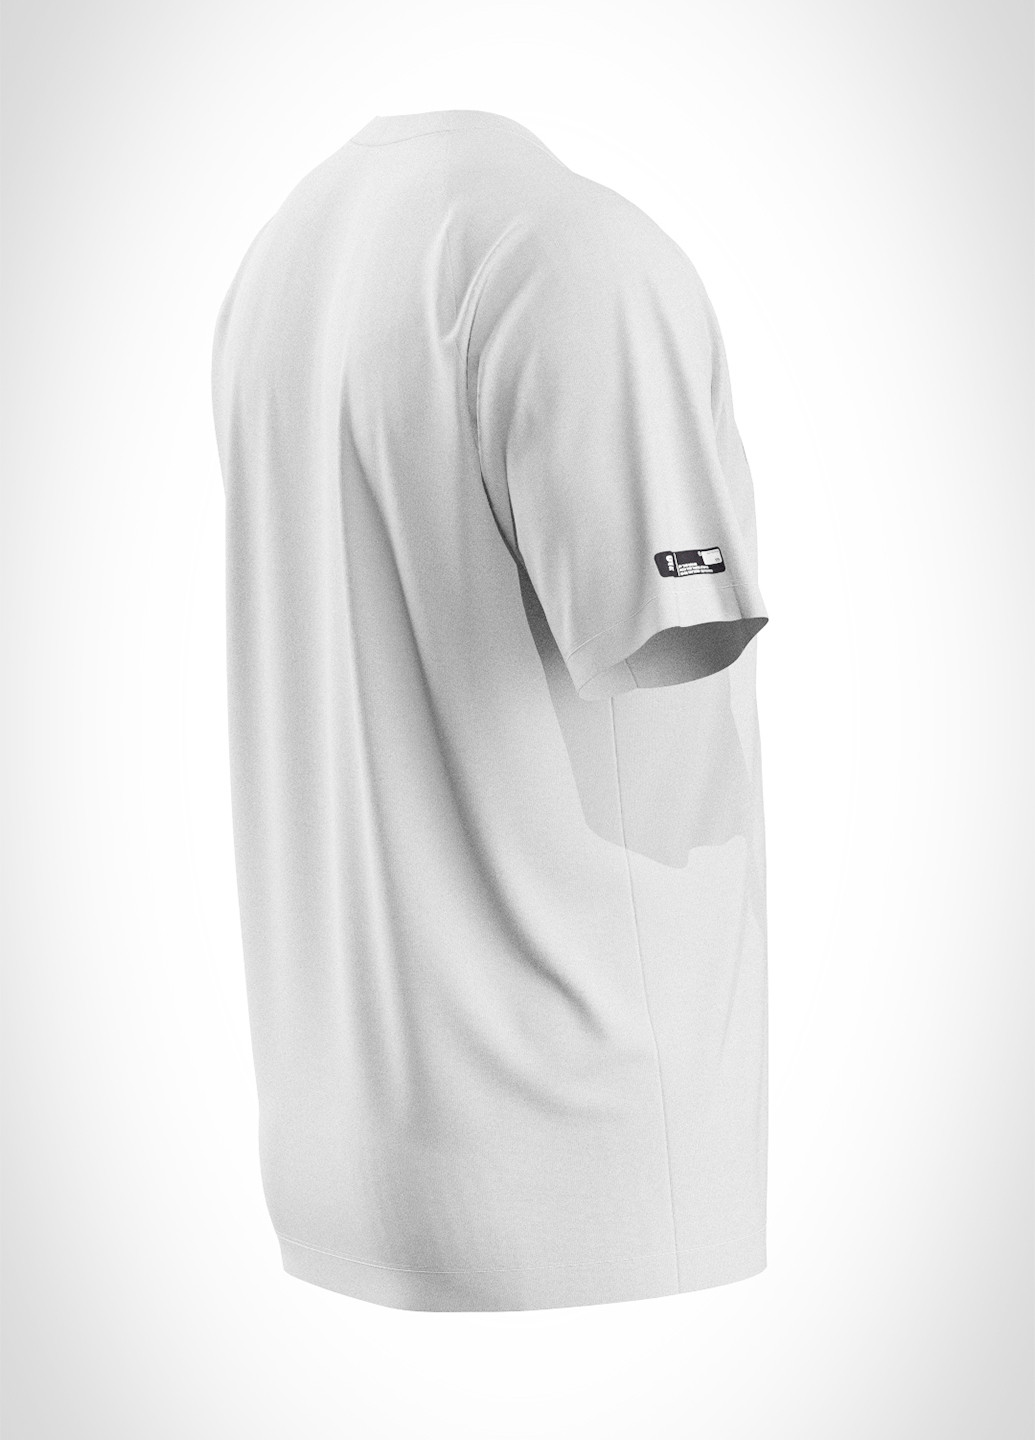 Белая футболка SA-sport